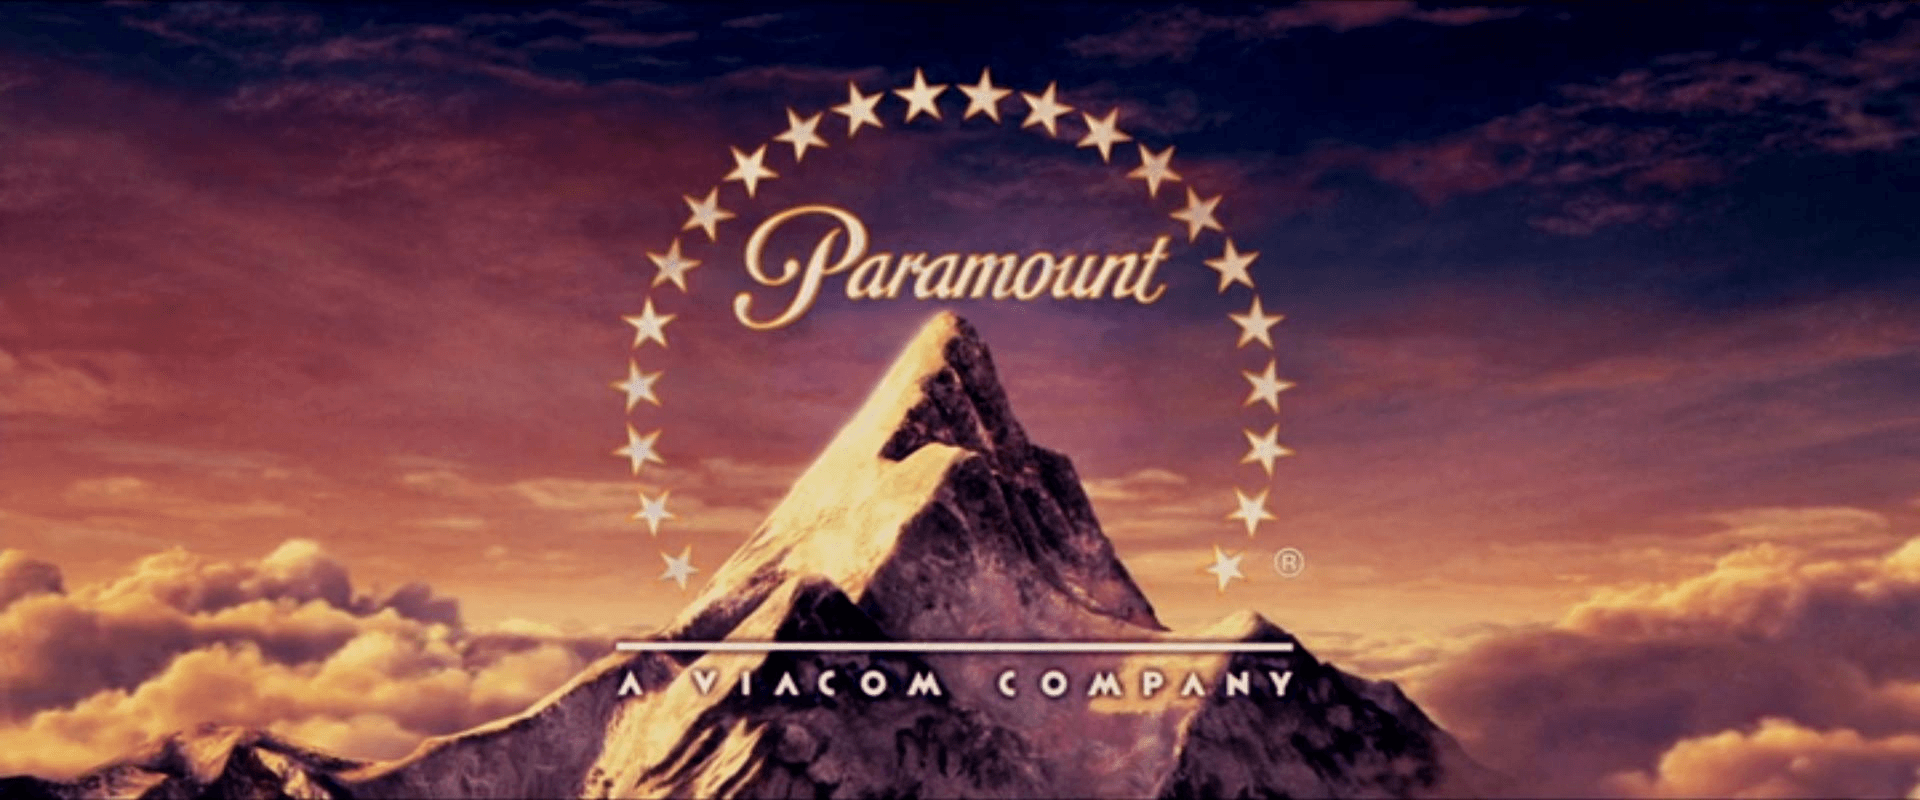 New Paramount Logo - Paramount logo new.png